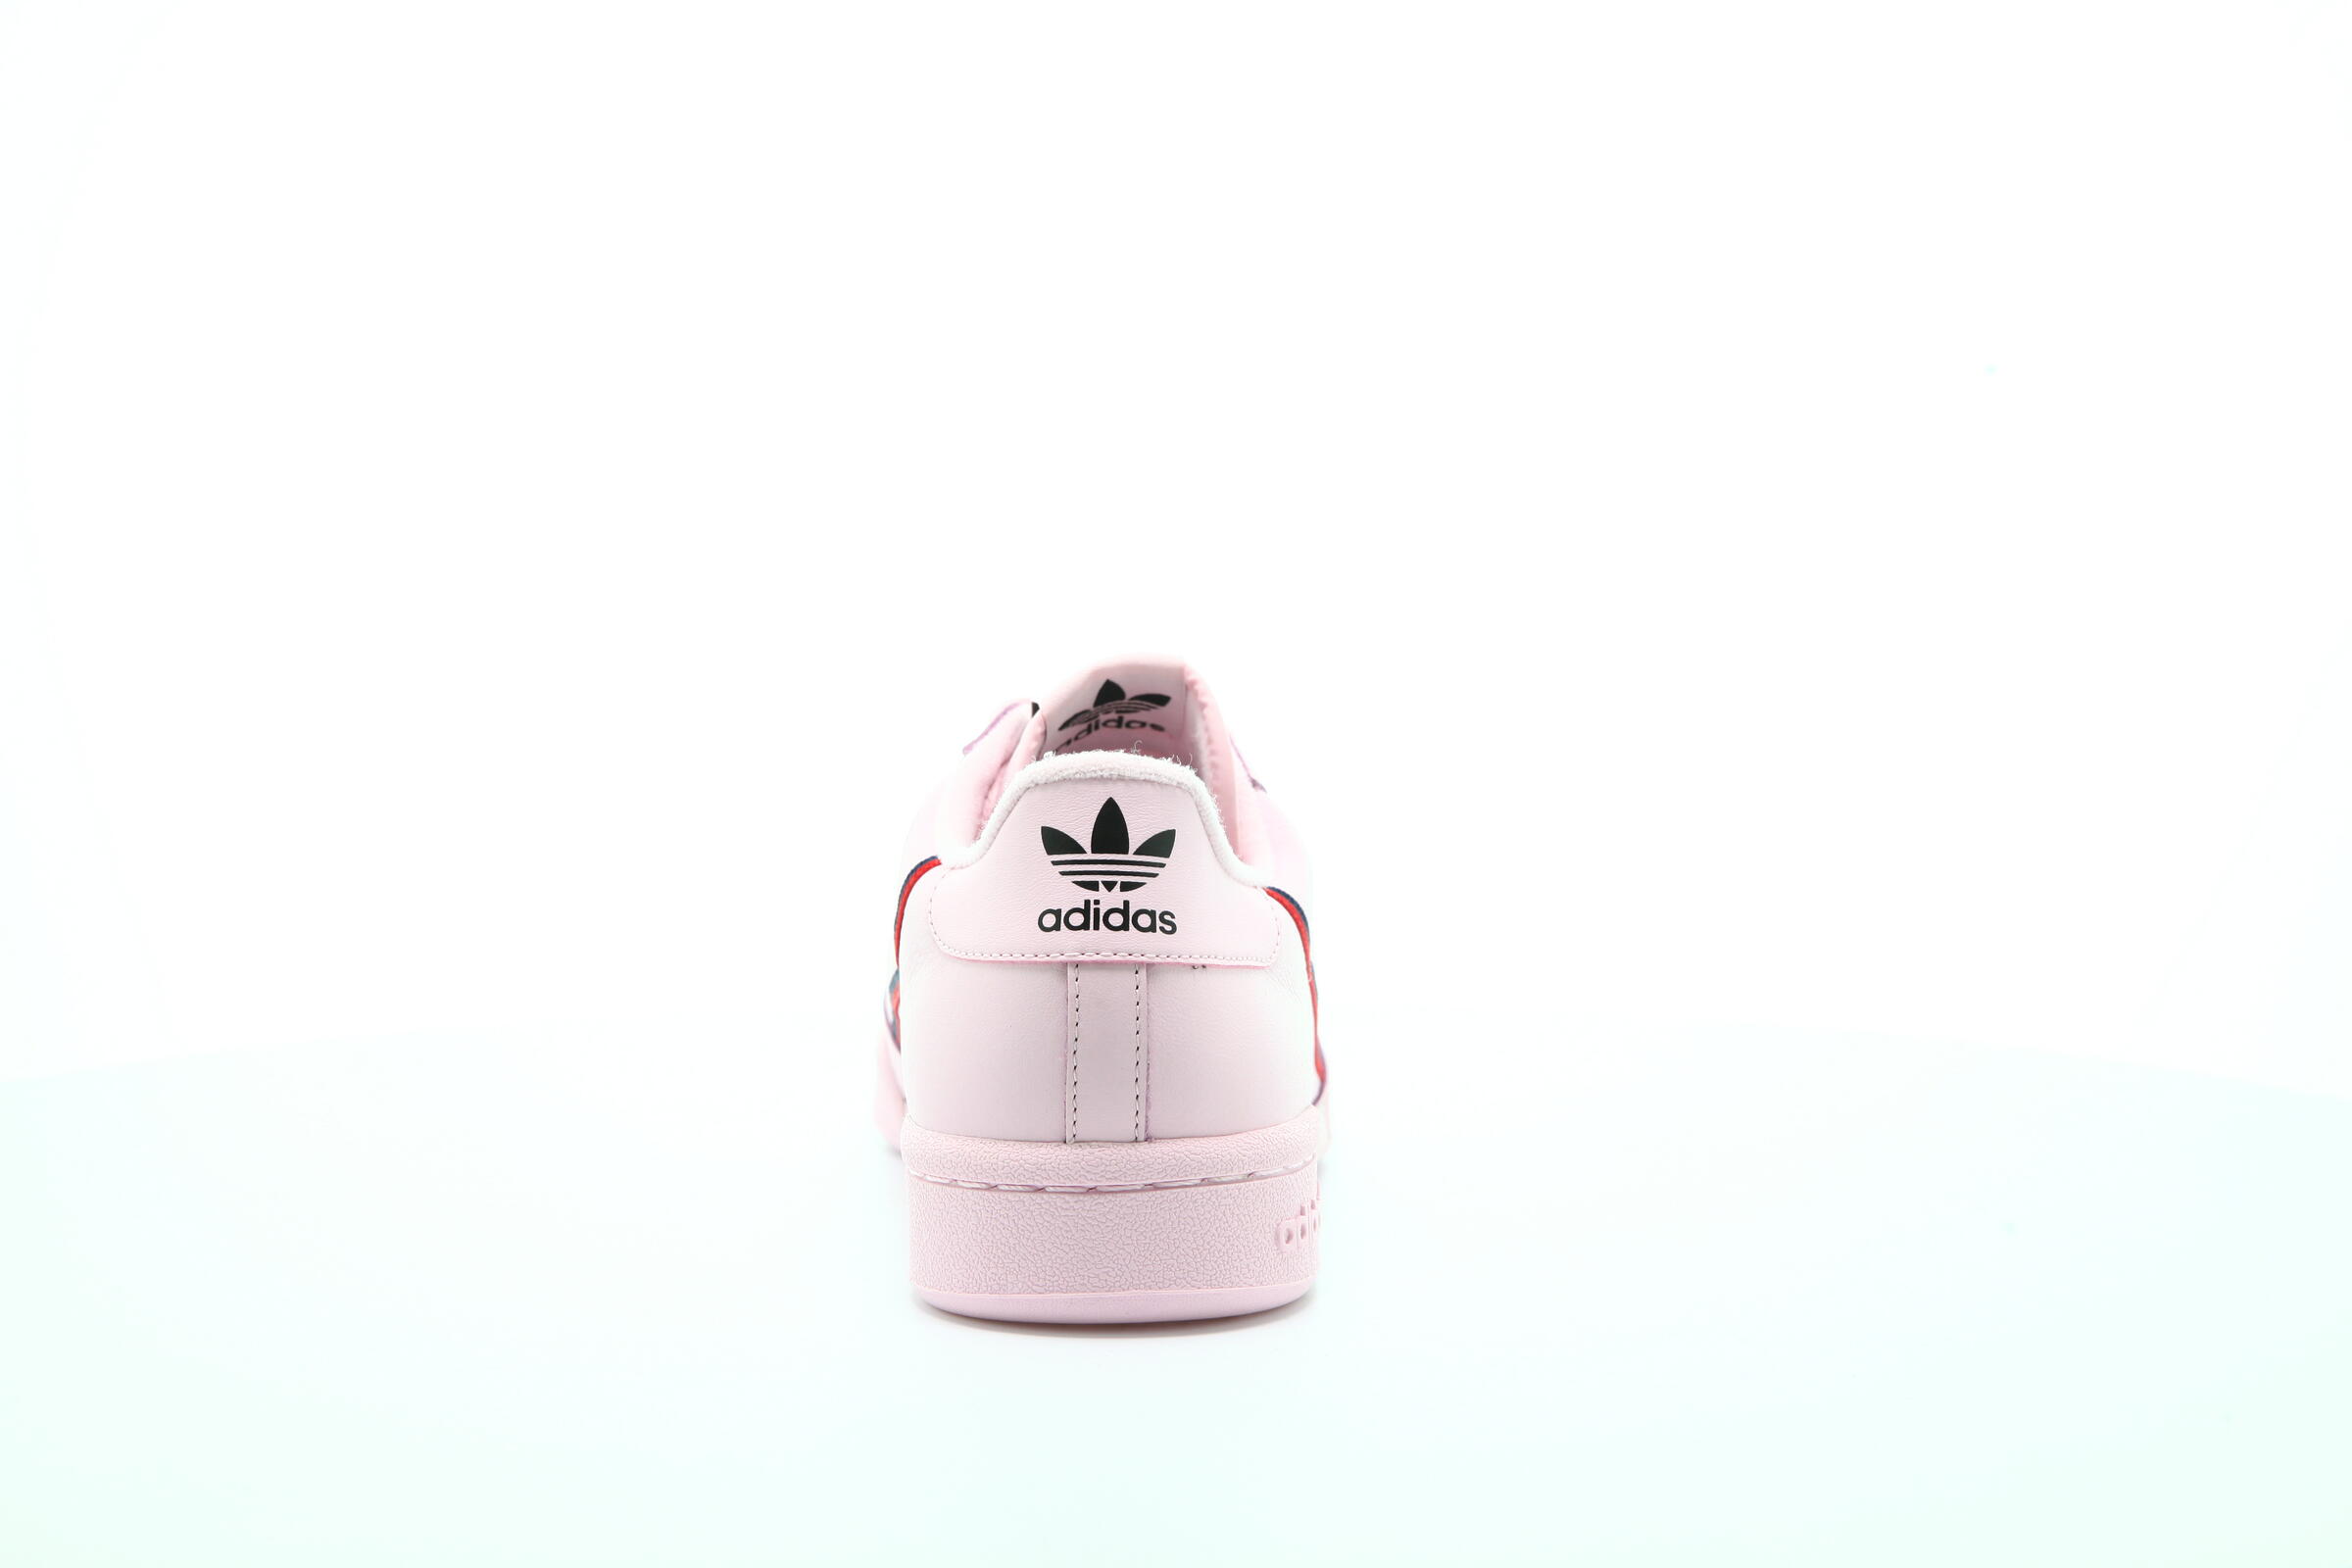 adidas Originals Continental 80 "Clear Pink"